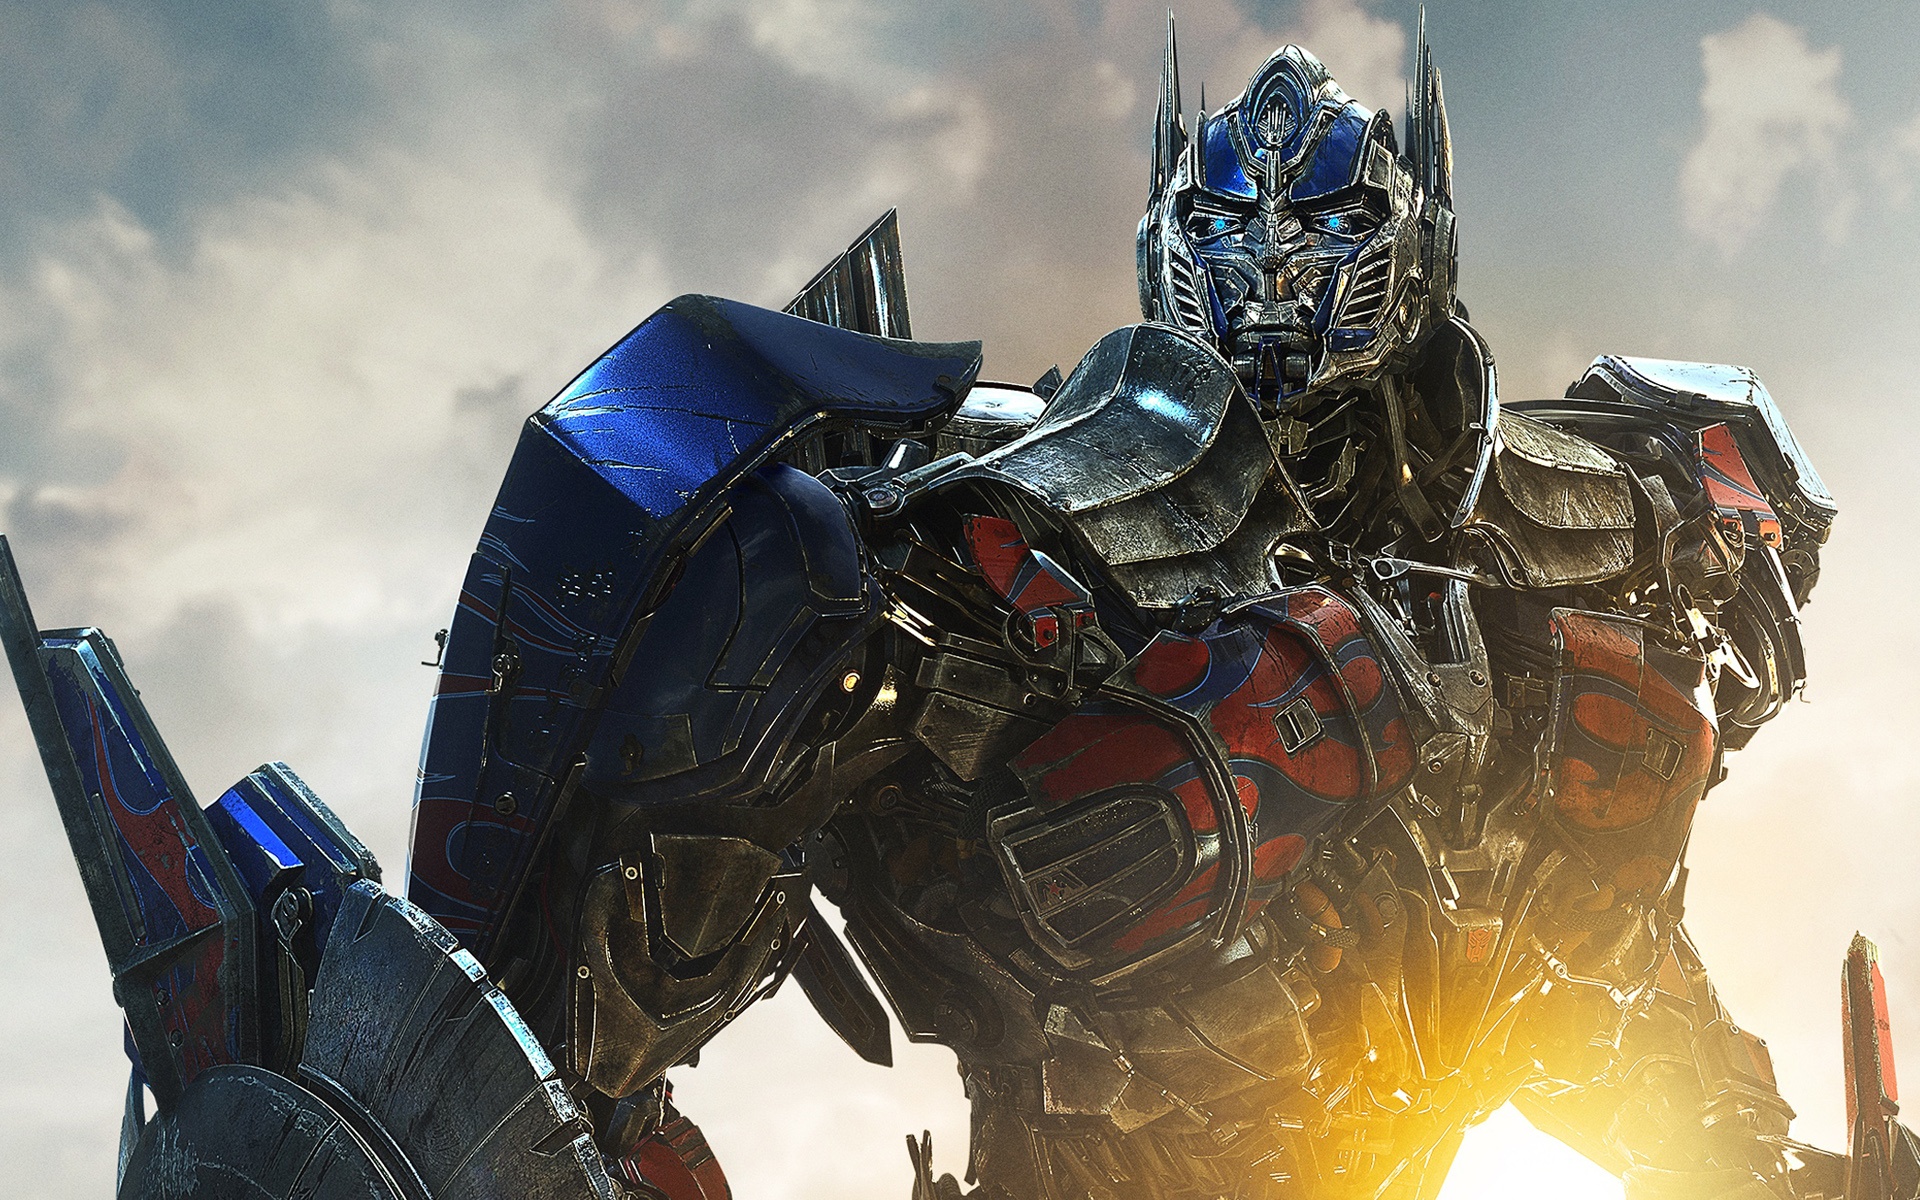 Wallpapers Optimus prime transformer wars on the desktop